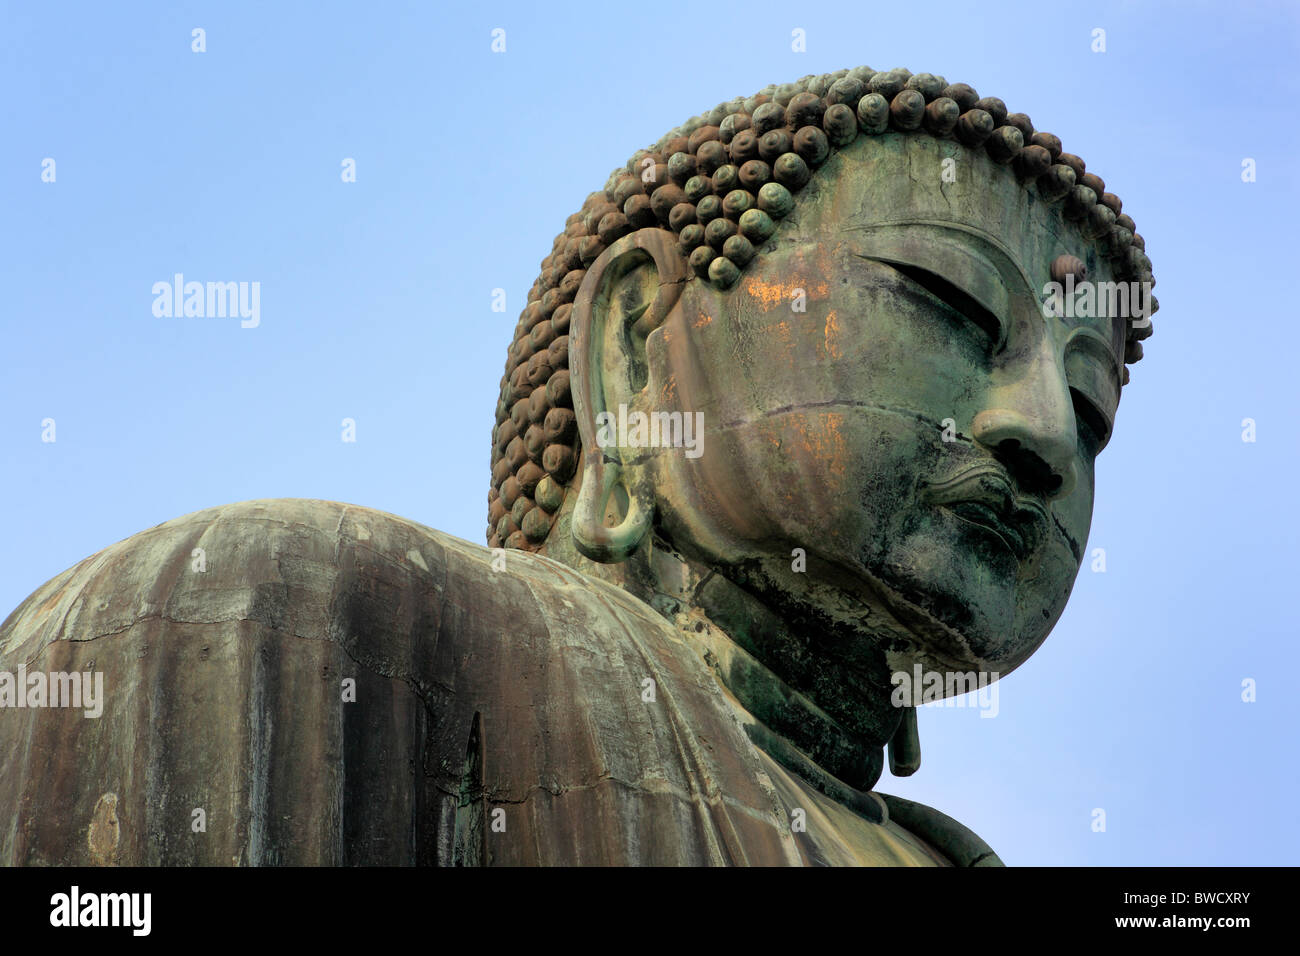 Daibutsu (Great Buddha) (1252), Kamakura, near Tokyo, Japan Stock Photo